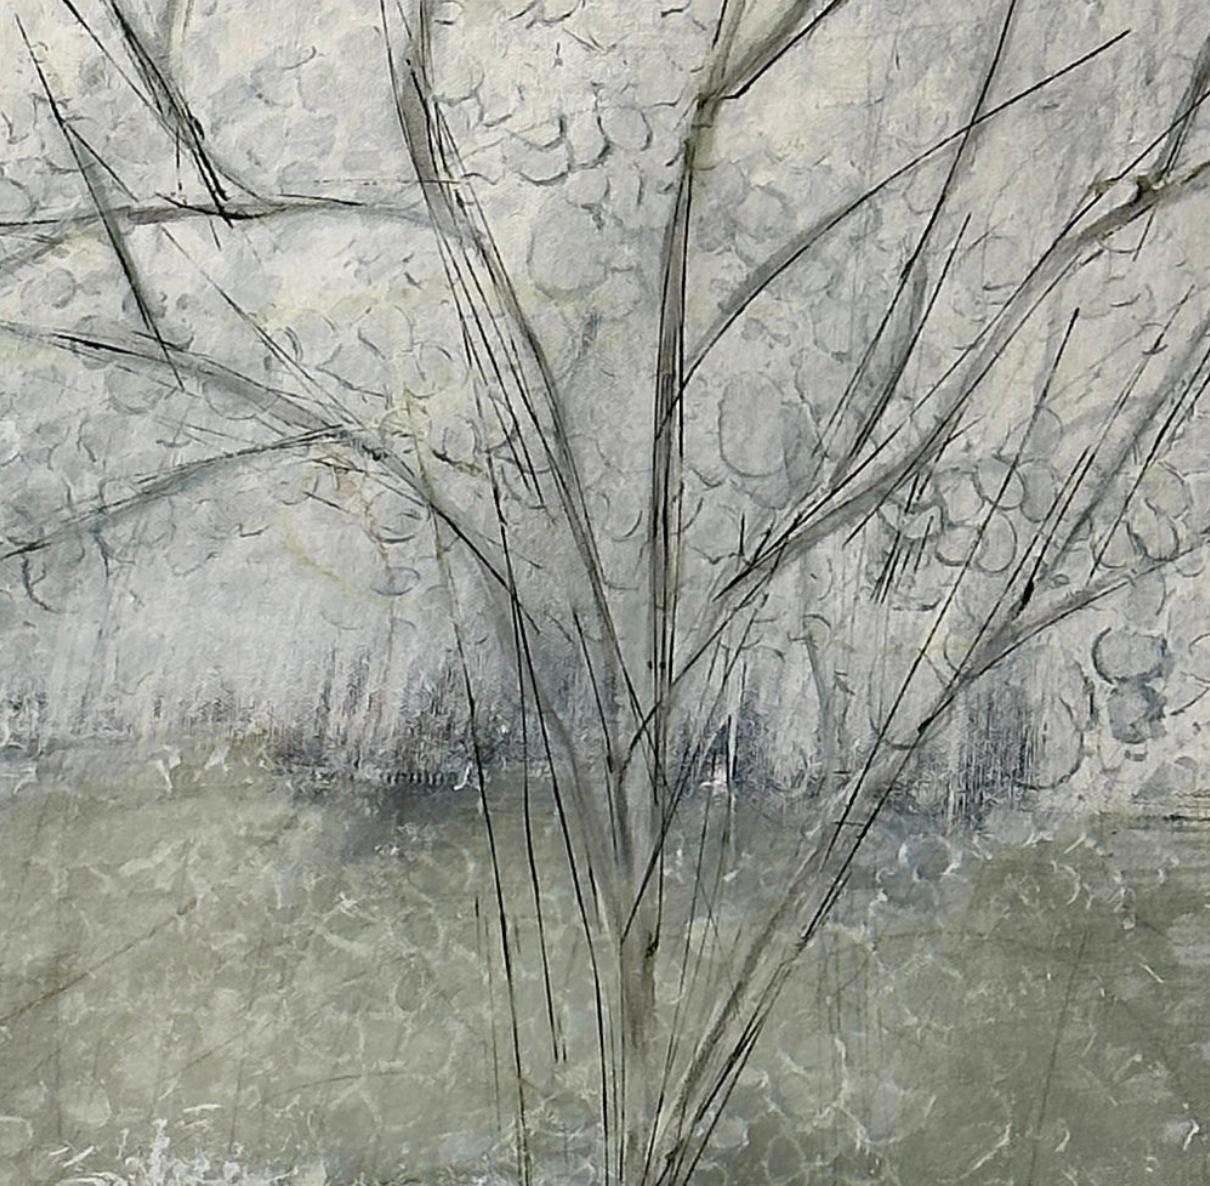 Neutral green, gray, white, uplifting, Sweet Walk - Gray Abstract Painting by Juanita Bellavance 